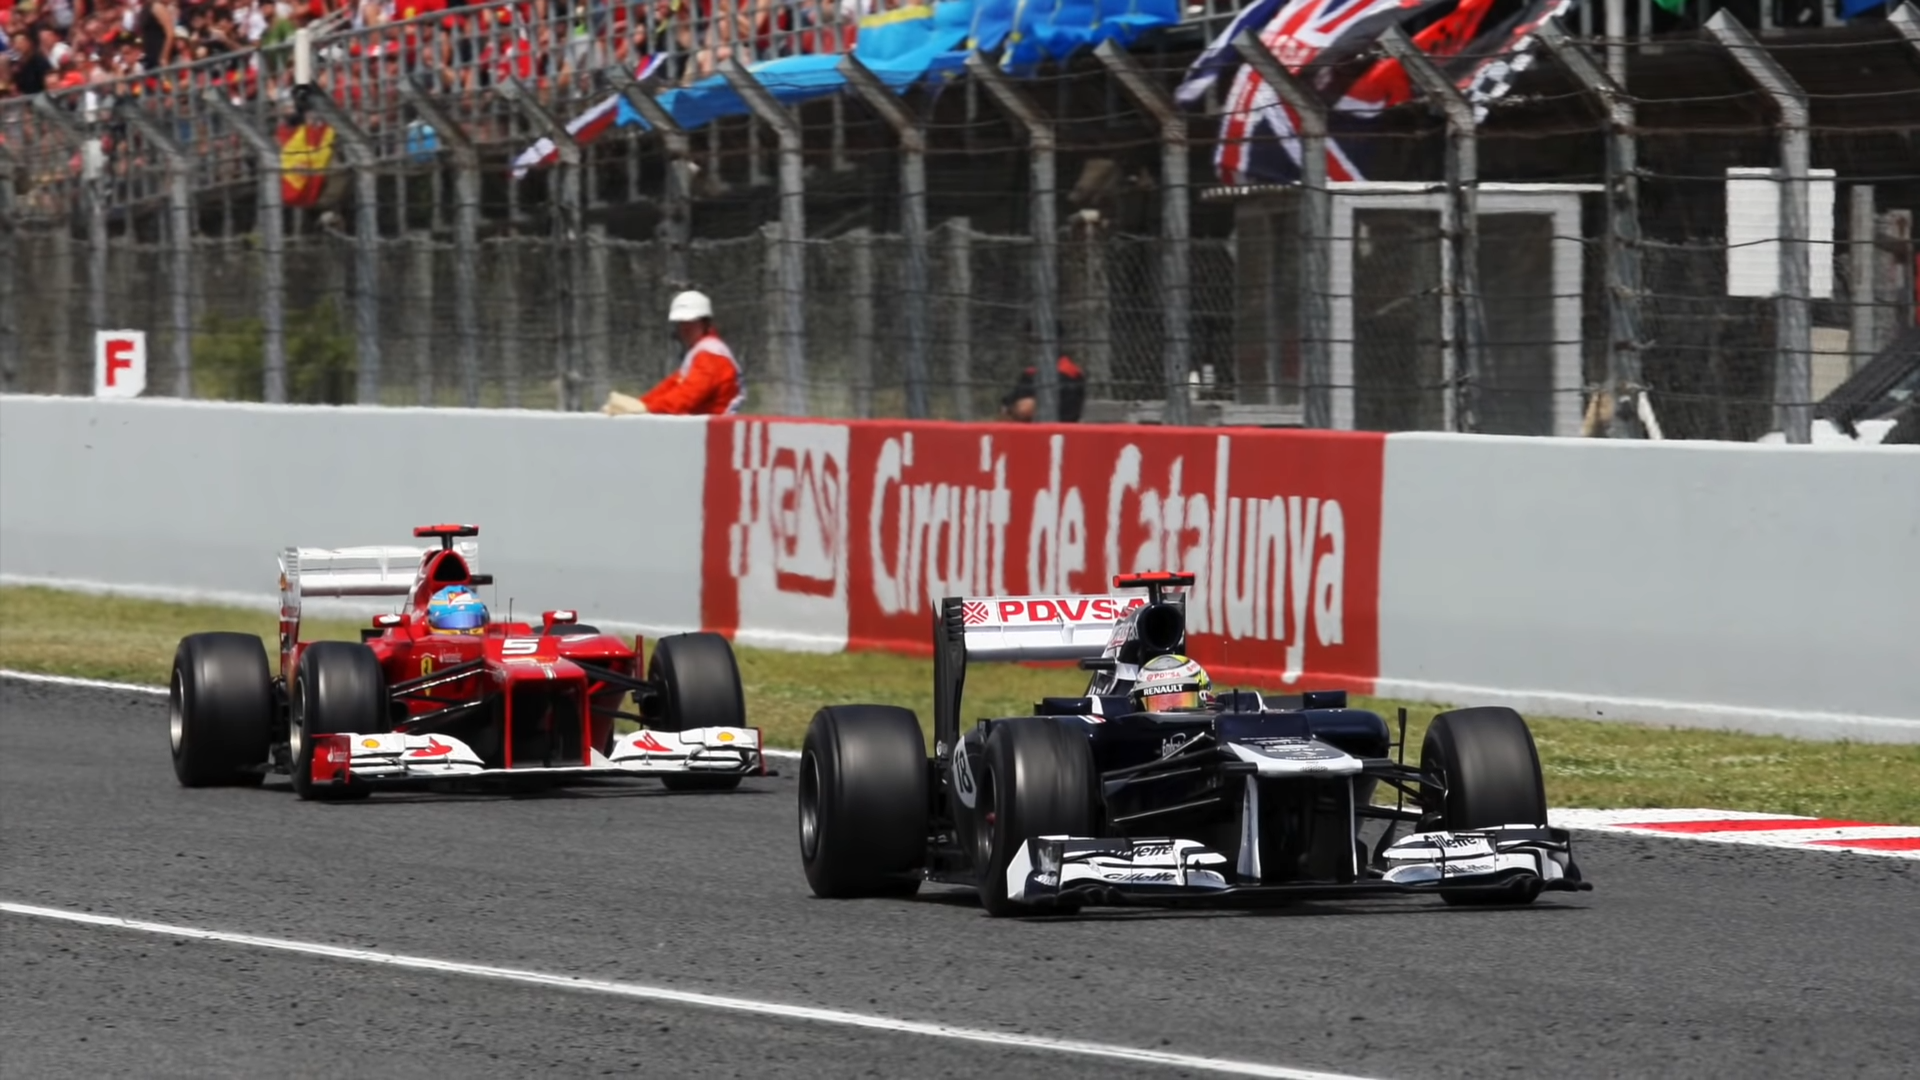 F1 2012 World Championship